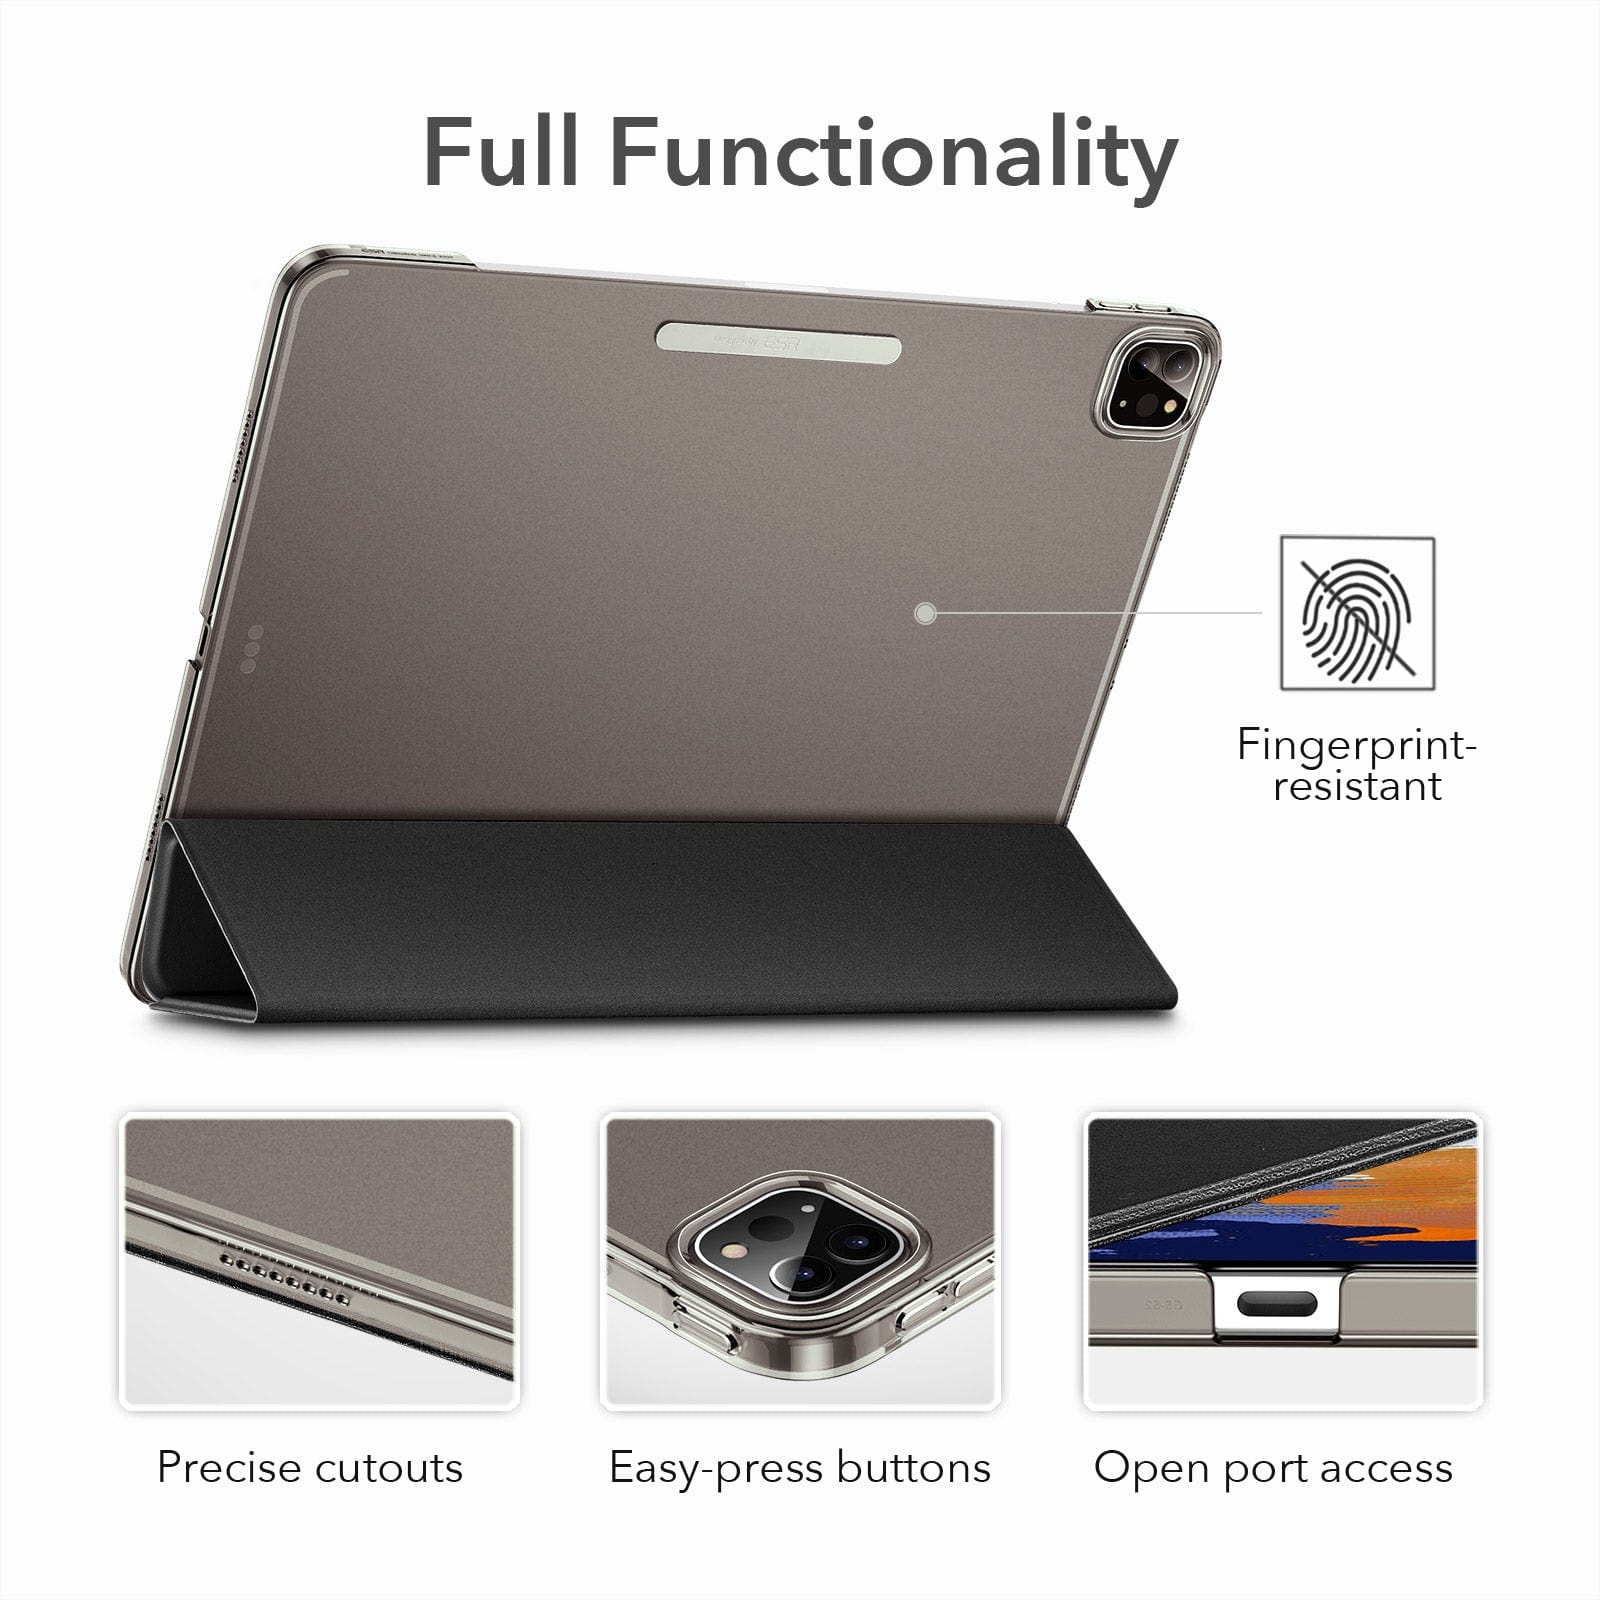 Indy Series Tri-Fold Folio Case - iPad Pro 11"